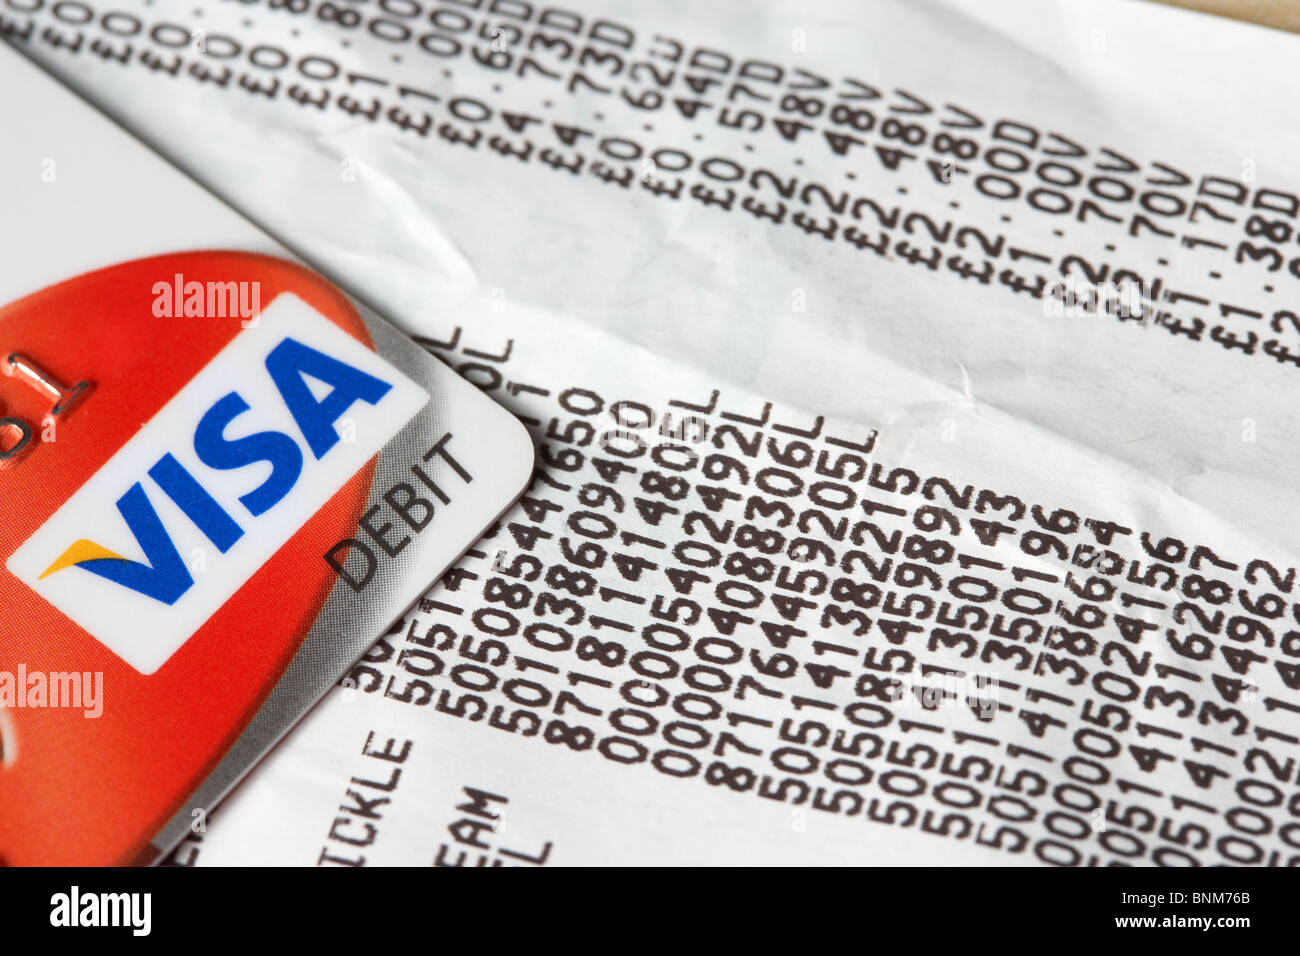 supermarket till receipt showing items and visa debit card Stock Photo